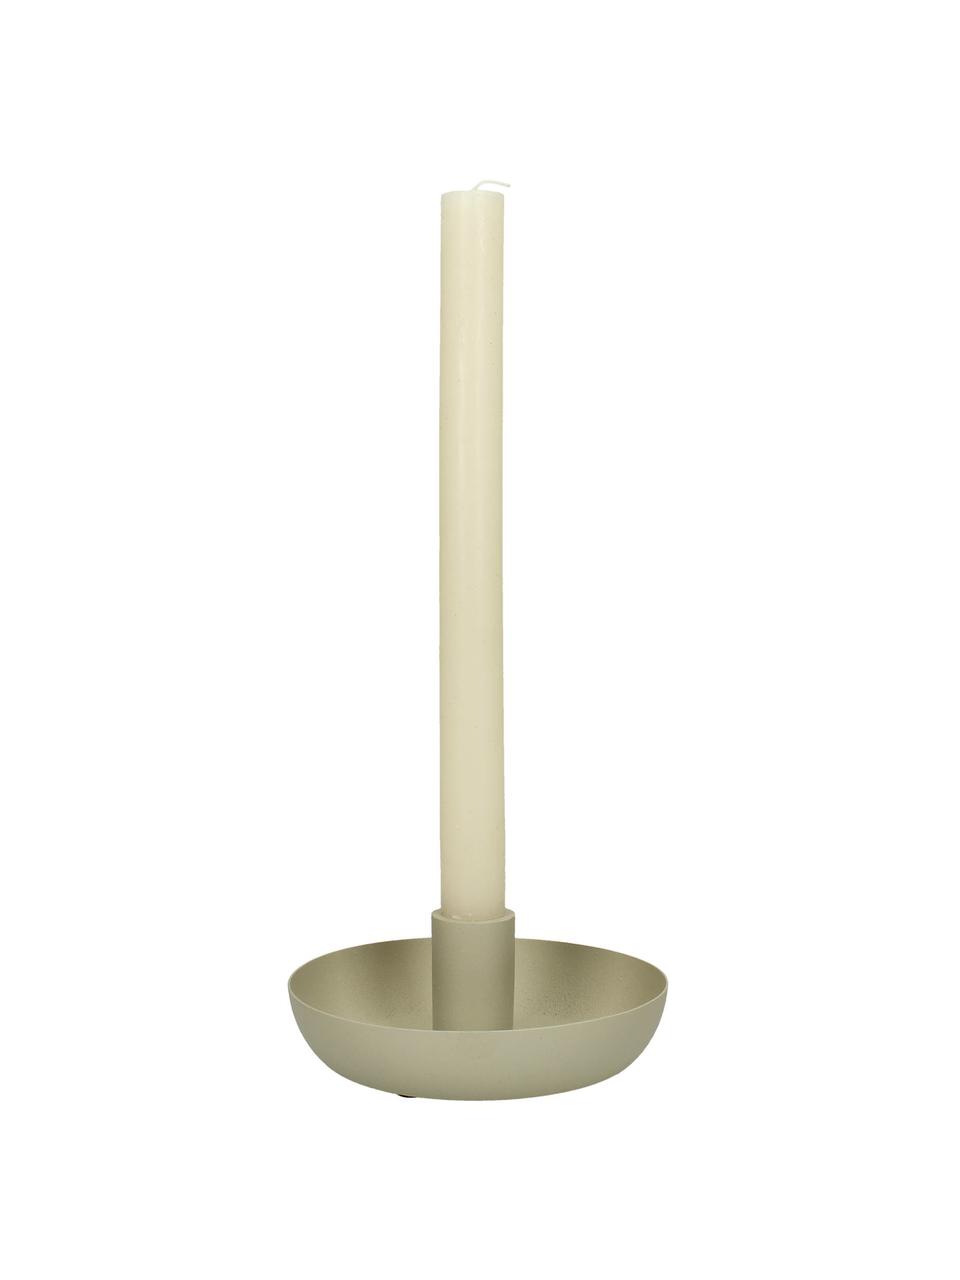 Kerzenhalter Doris in Beige, Aluminium, Beige, Ø 14 x H 5 cm